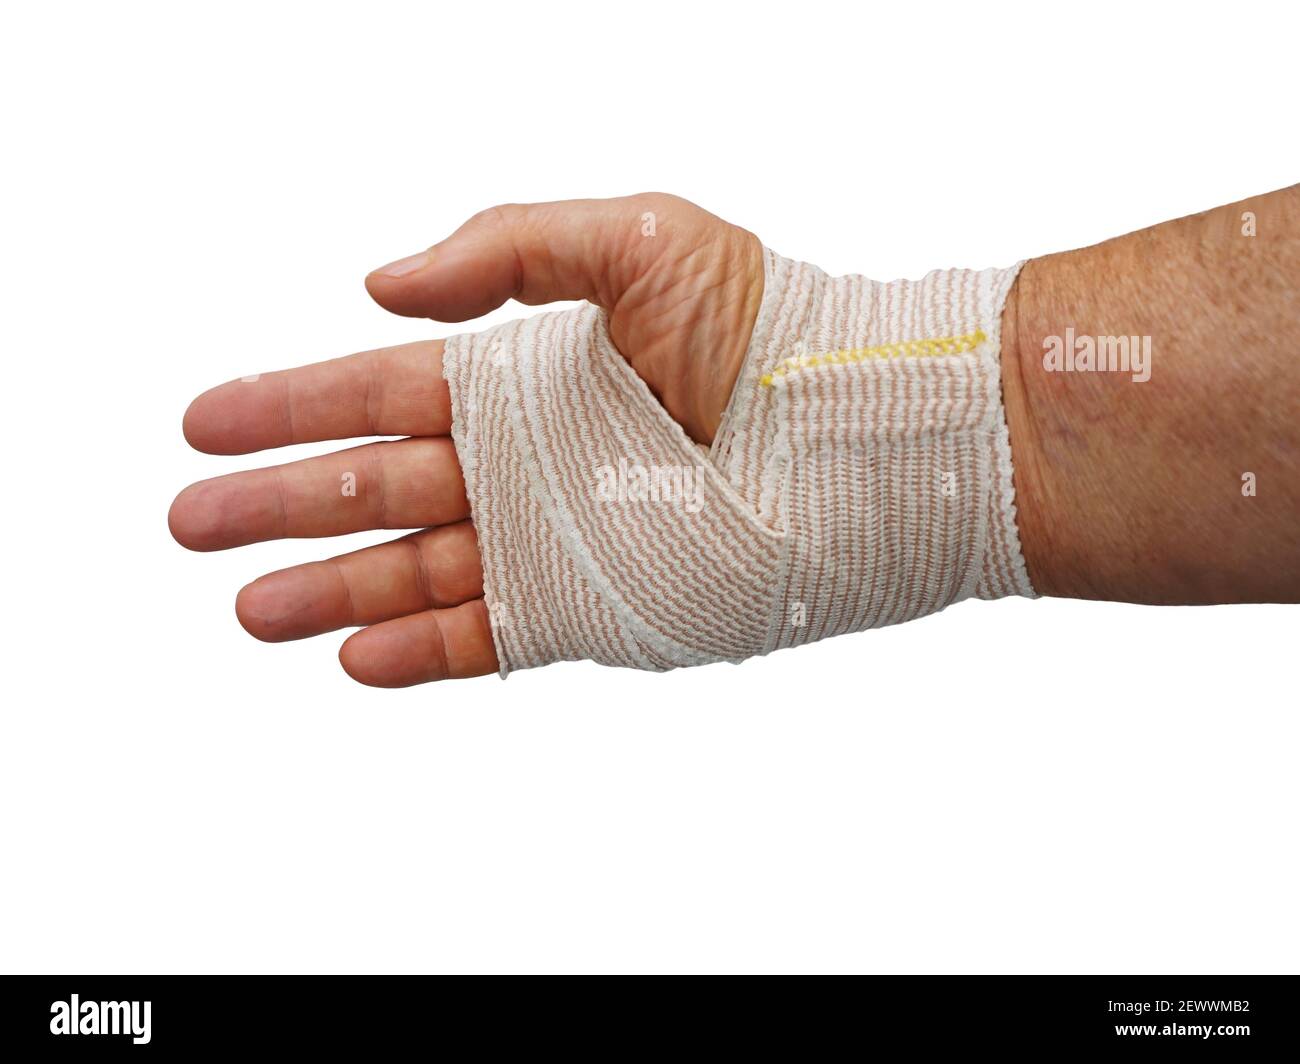 Elastic medical bandage on man's right hand and wrist Stock Photo - Alamy